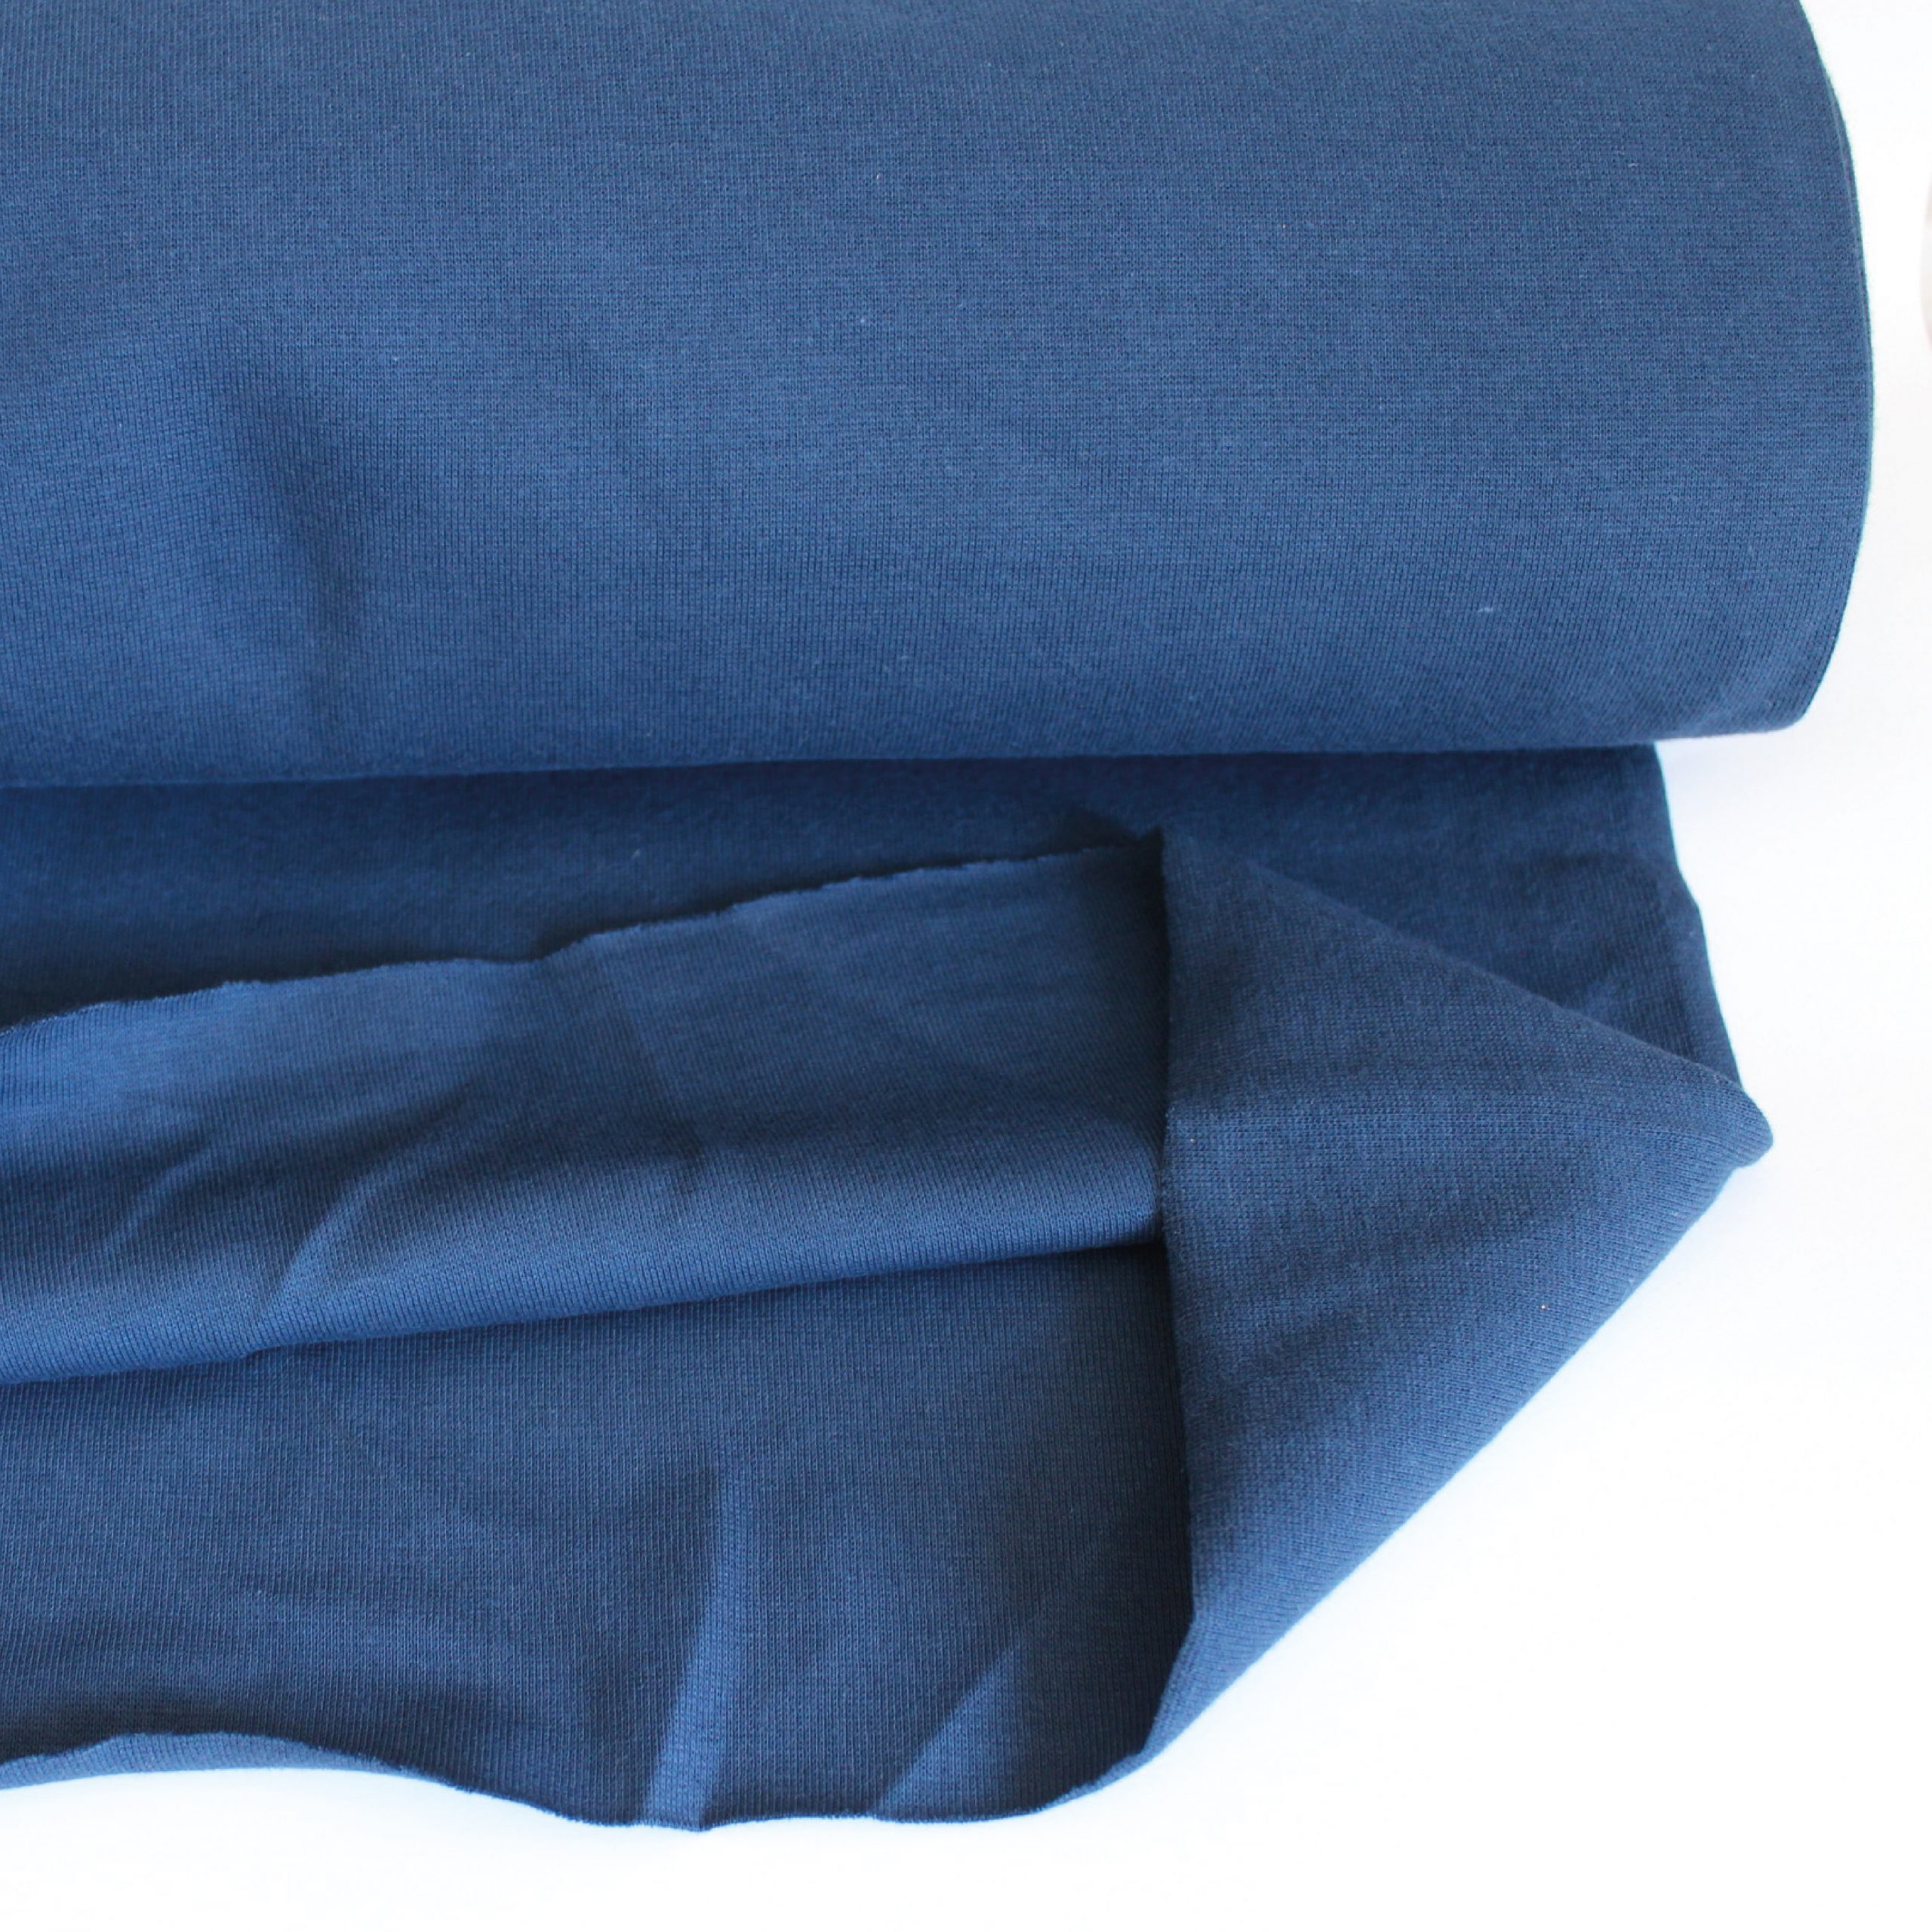 jersey bord-côte – bleu indigo